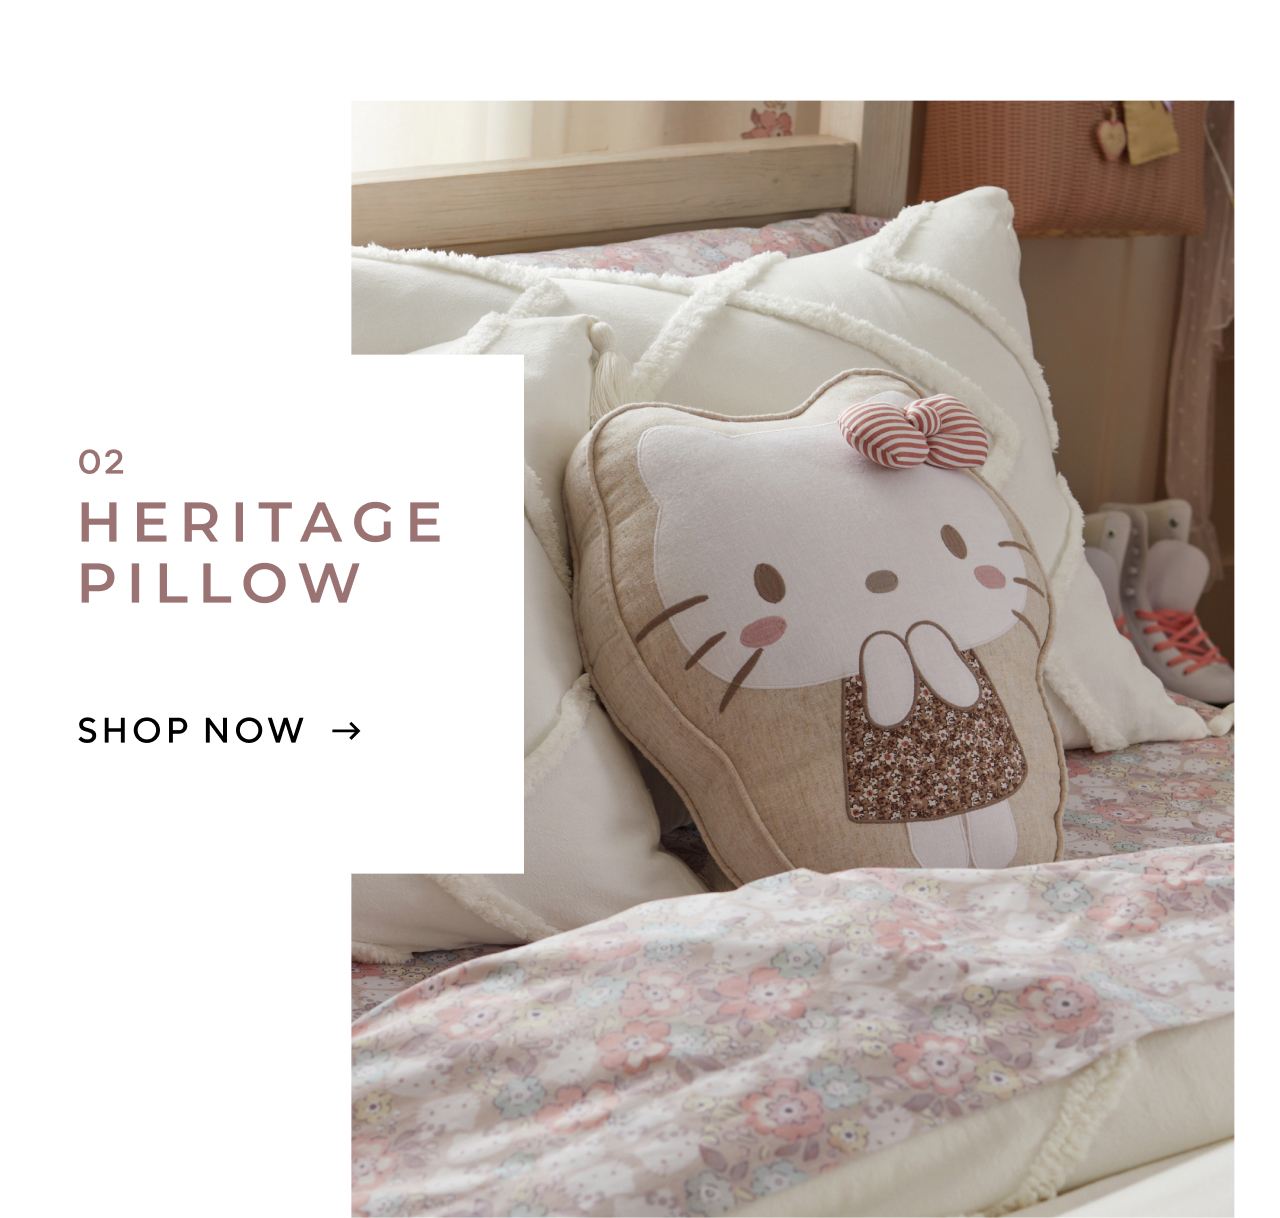 Heritage pillow